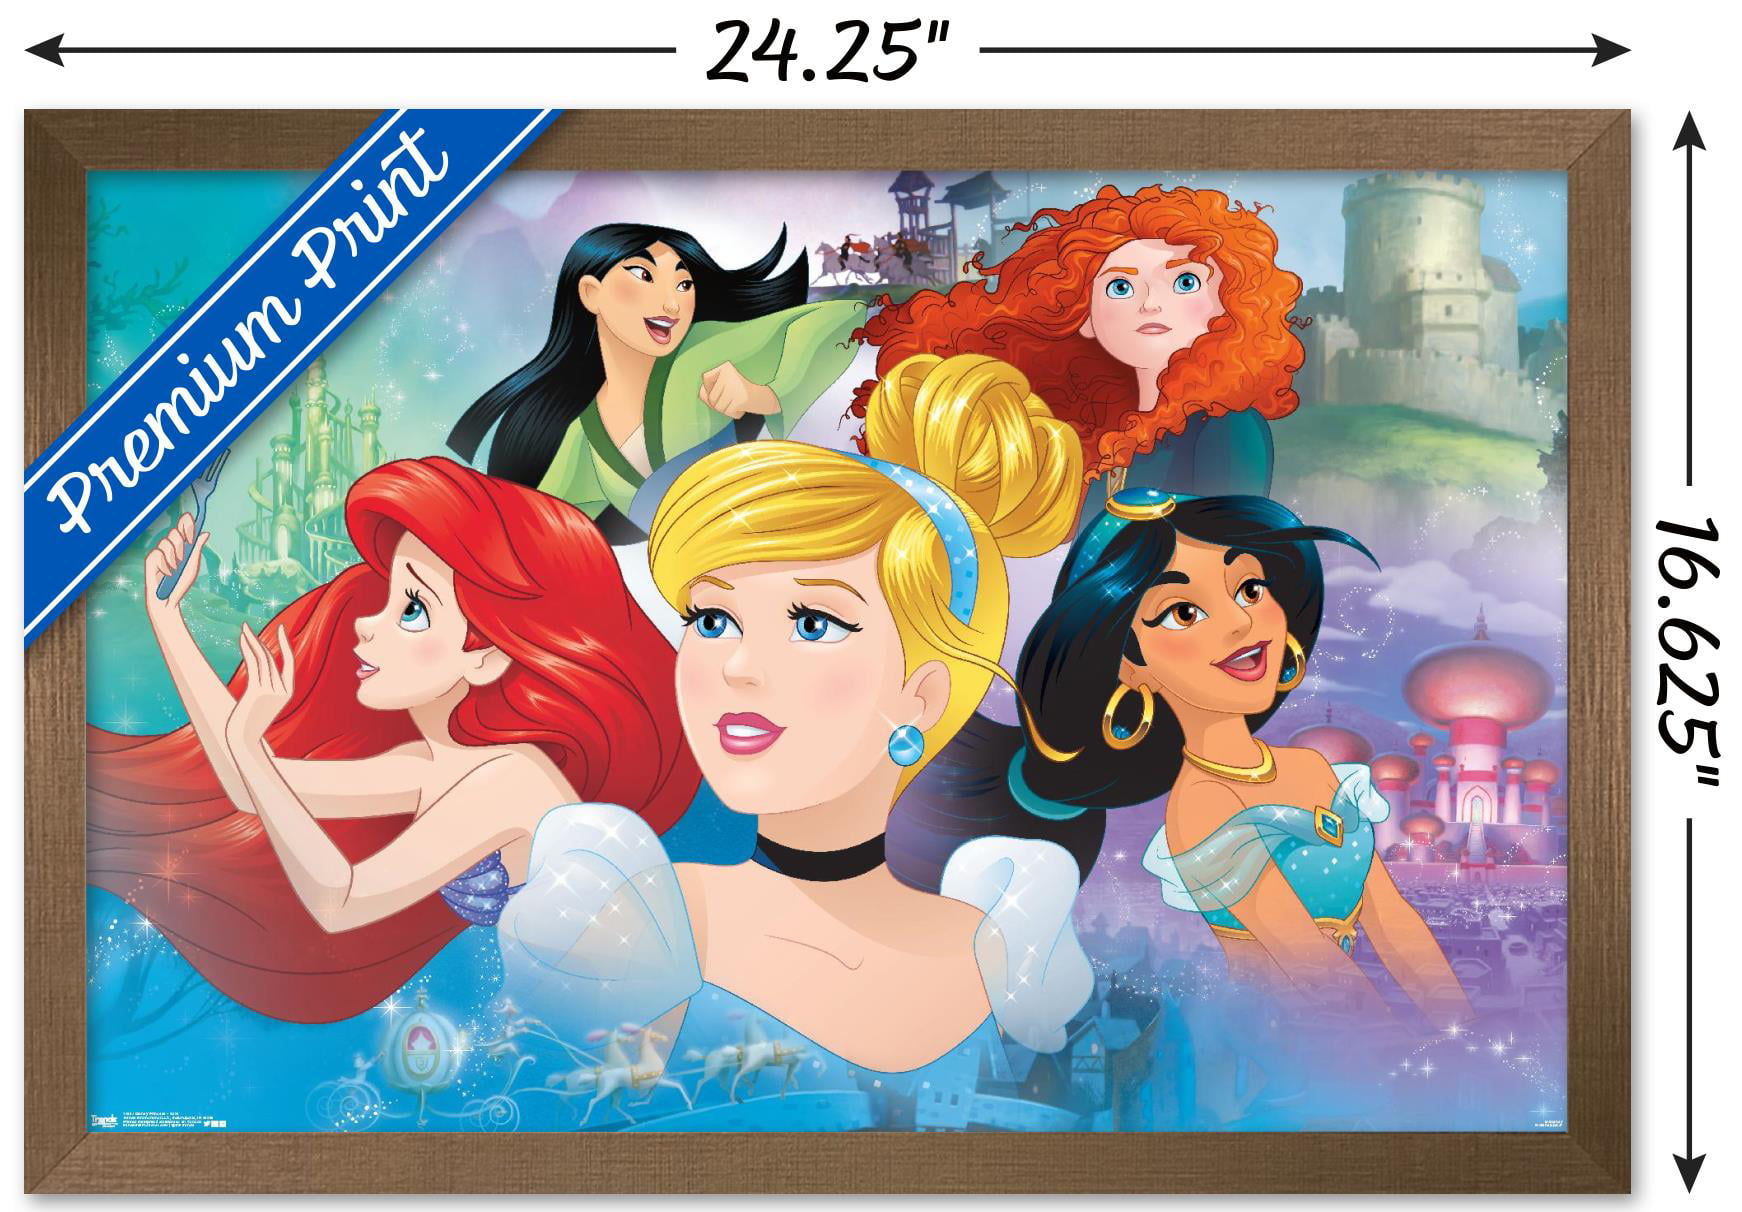 Puzzle 500 pièces : Princesses Disney - N/A - Kiabi - 12.69€